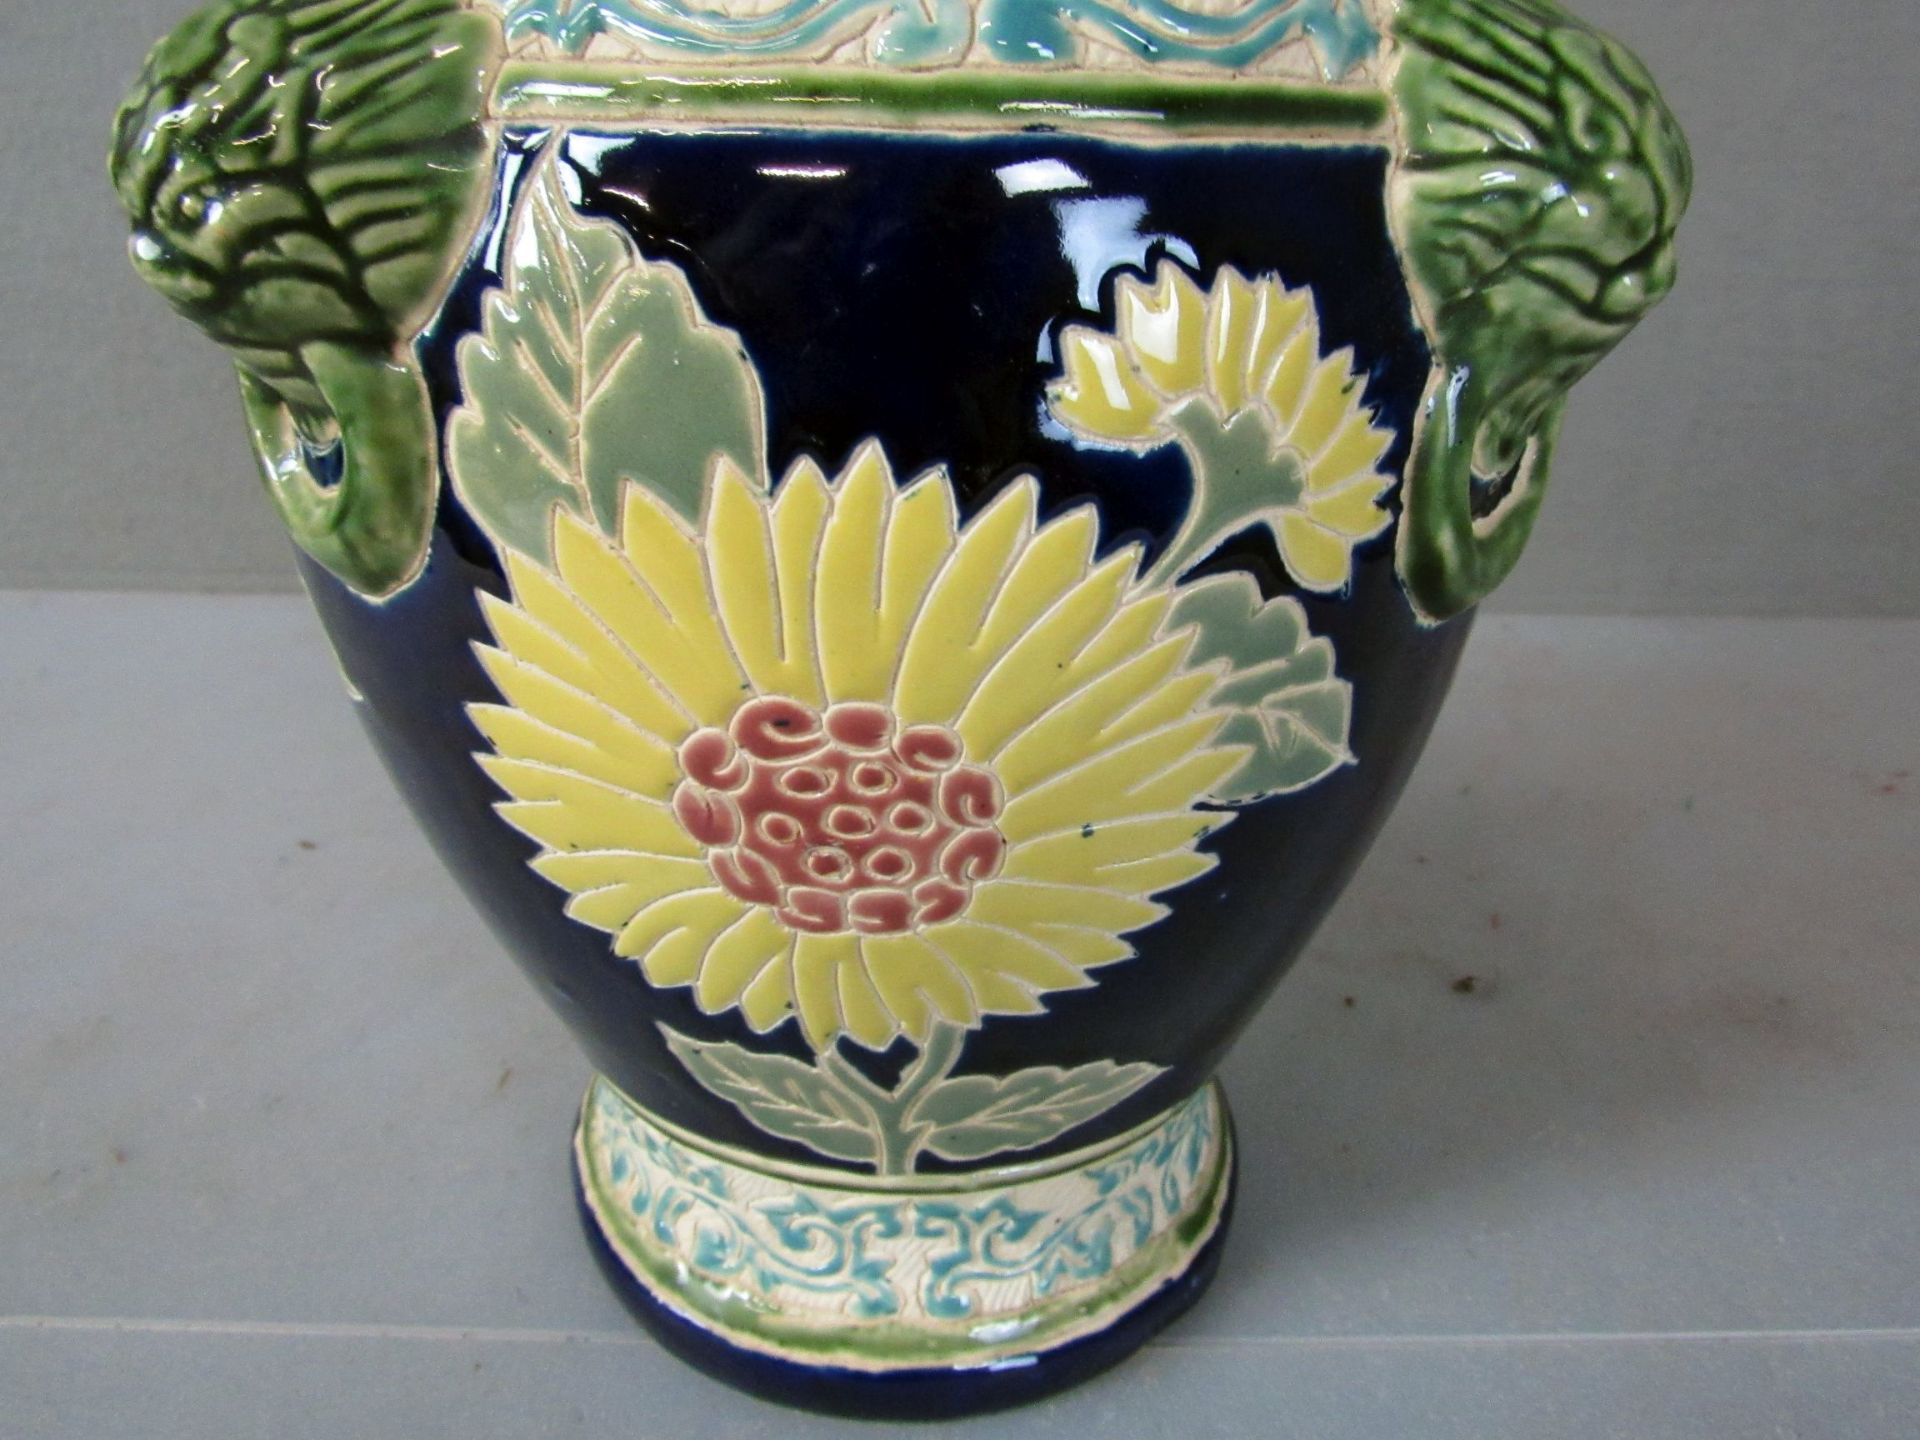 Amphorenvase lasierte Keramik Majolika - Image 4 of 8